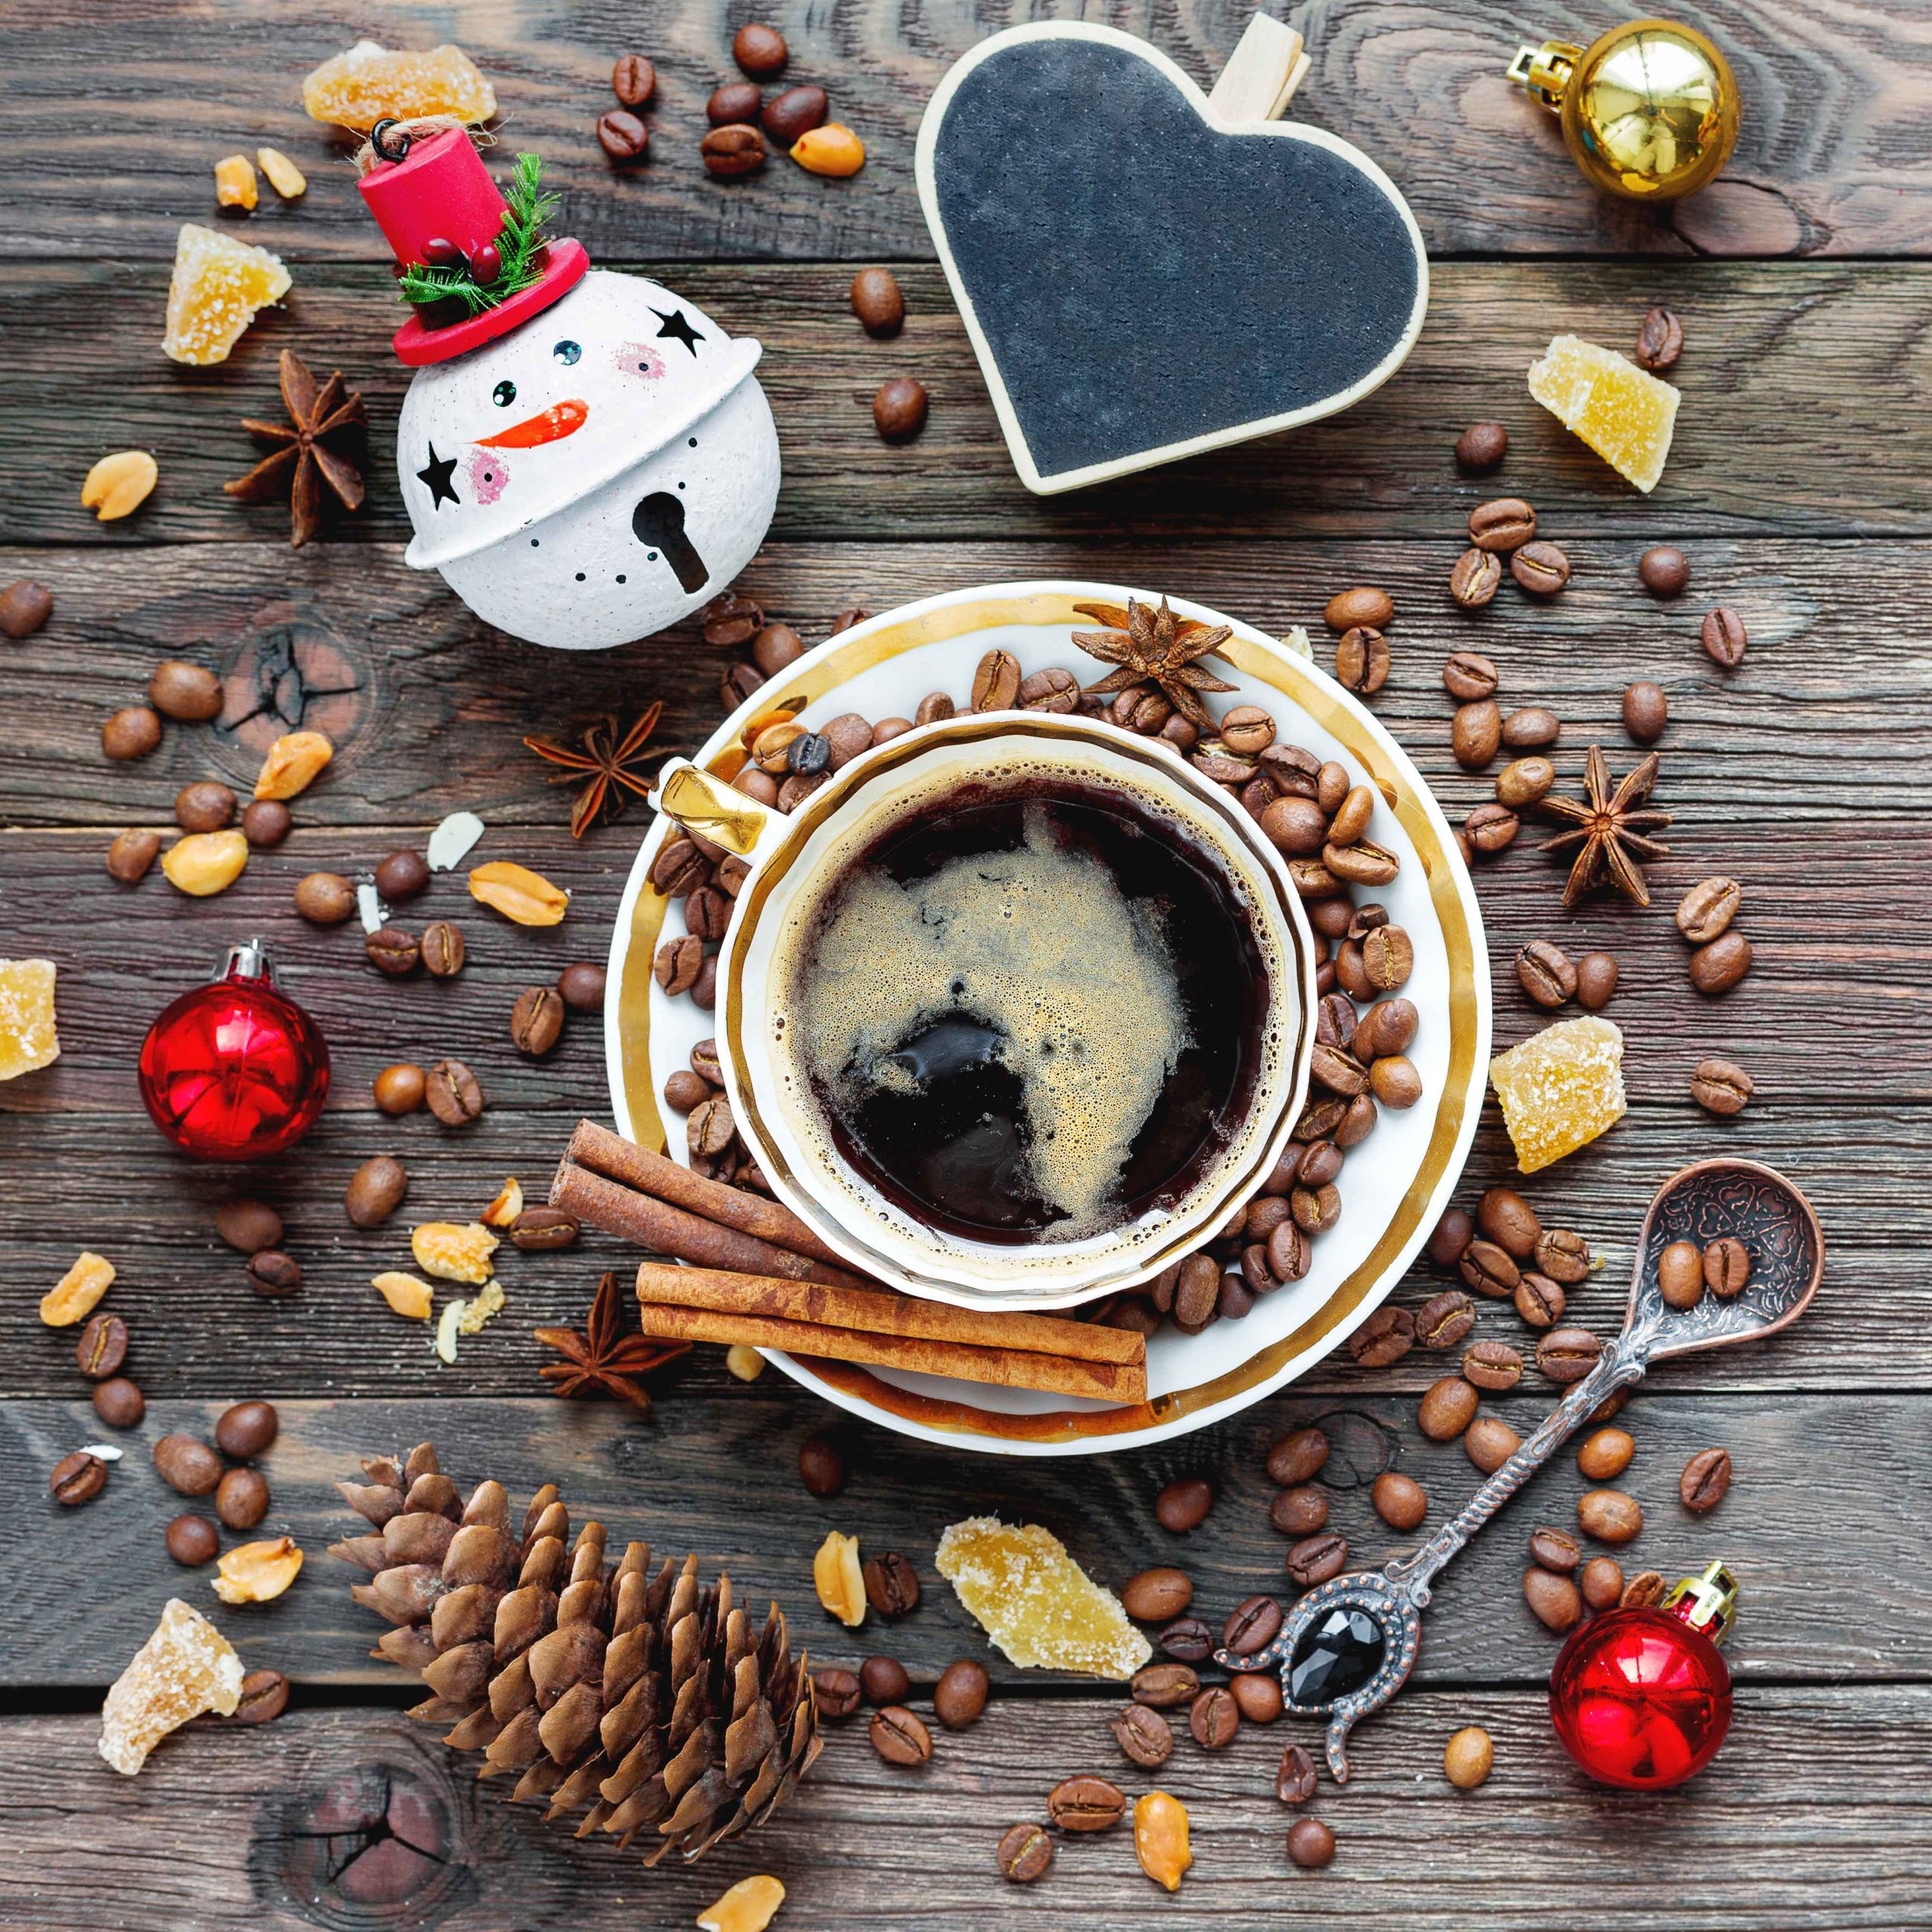 Philadelphia Office Coffee | Allentown Healthy Foods | Lancaster Break Room Holiday Solutions